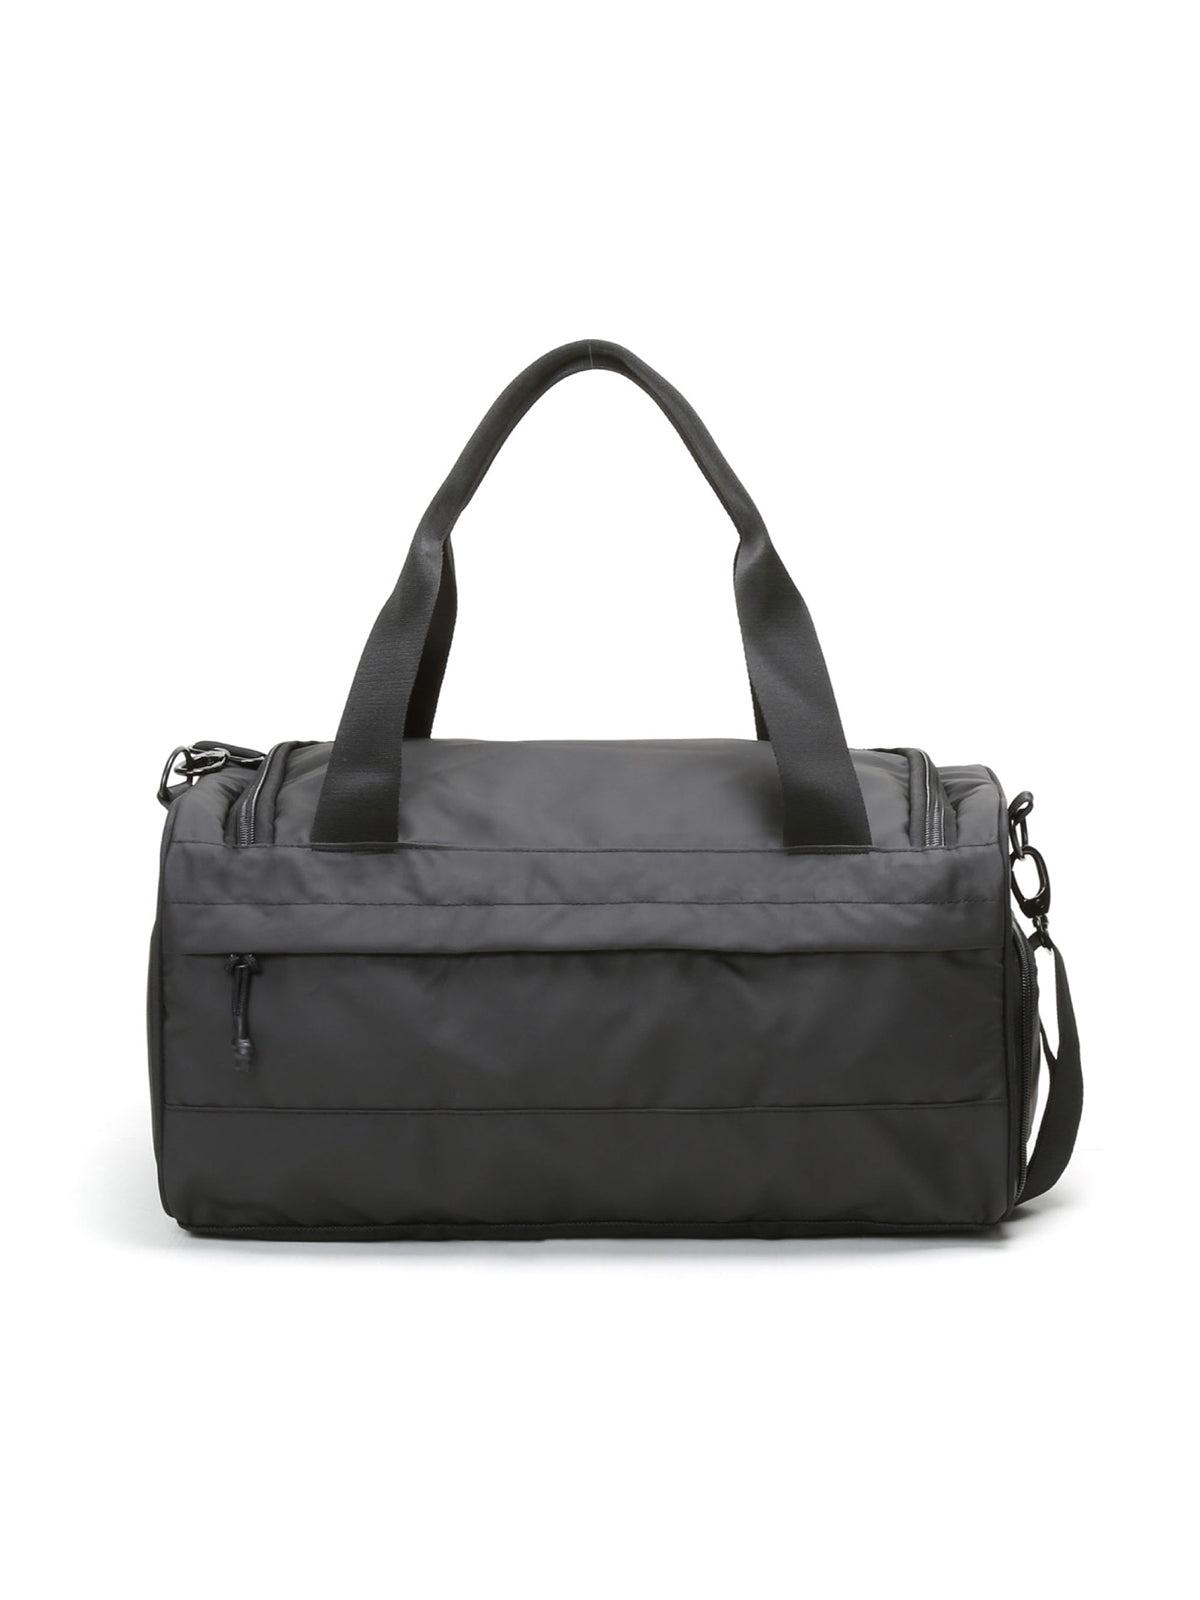 [VOORAY] BOOST DUFFEL / Boston bag, shoulder bag